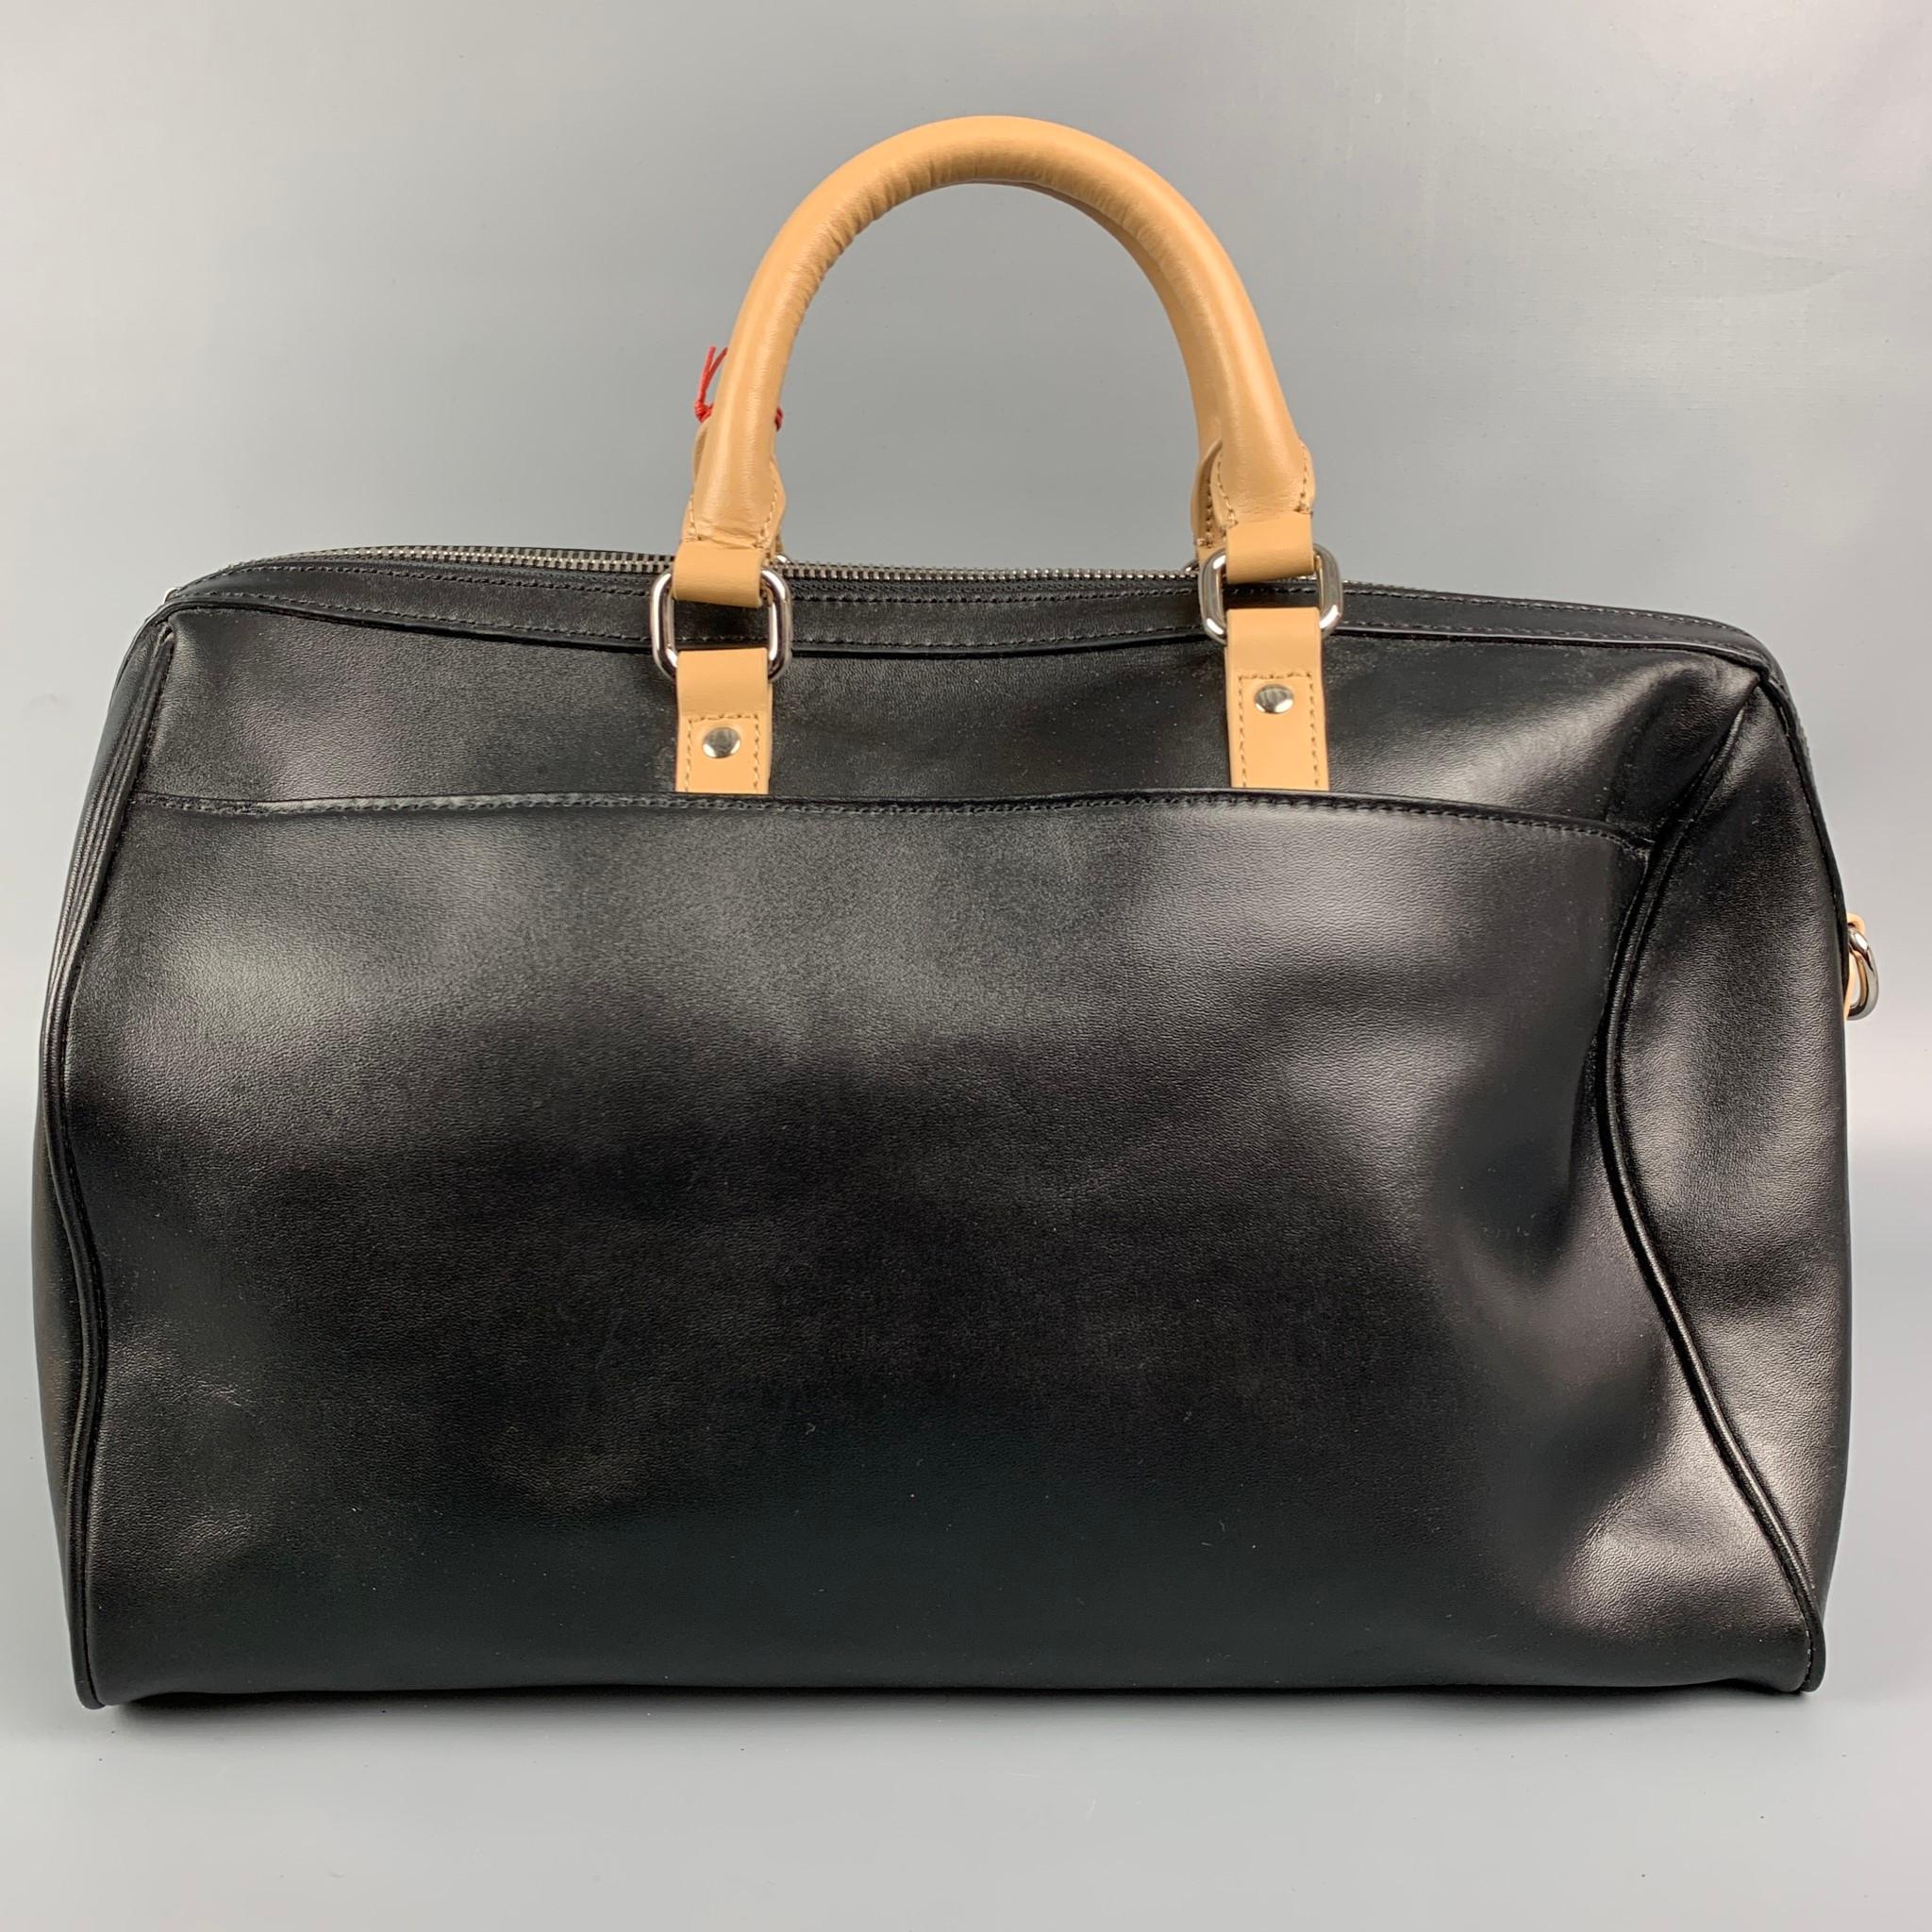 black and tan leather handbags